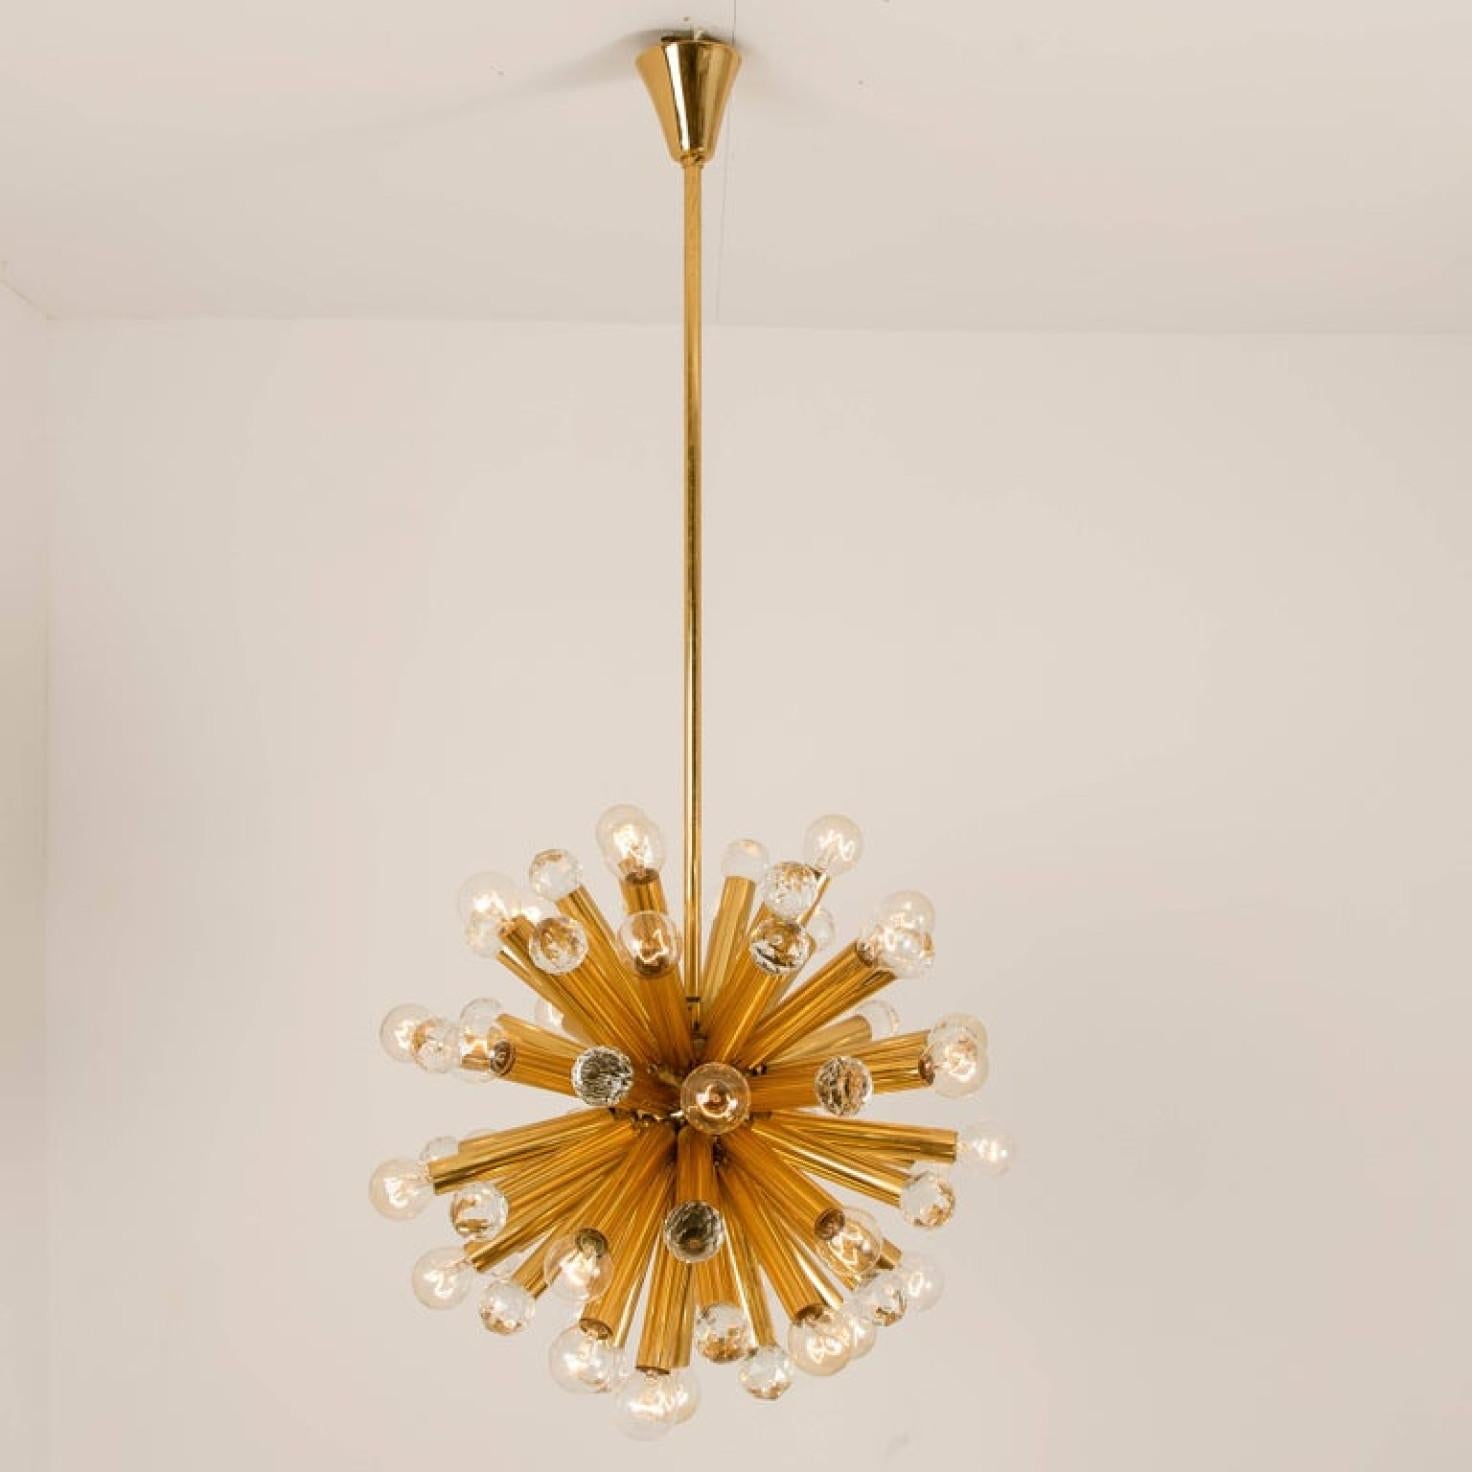 Mid-Century Modern Gilt Brass Pendant Lamp with Swarovski Balls from Ernst Palme, 1960s For Sale